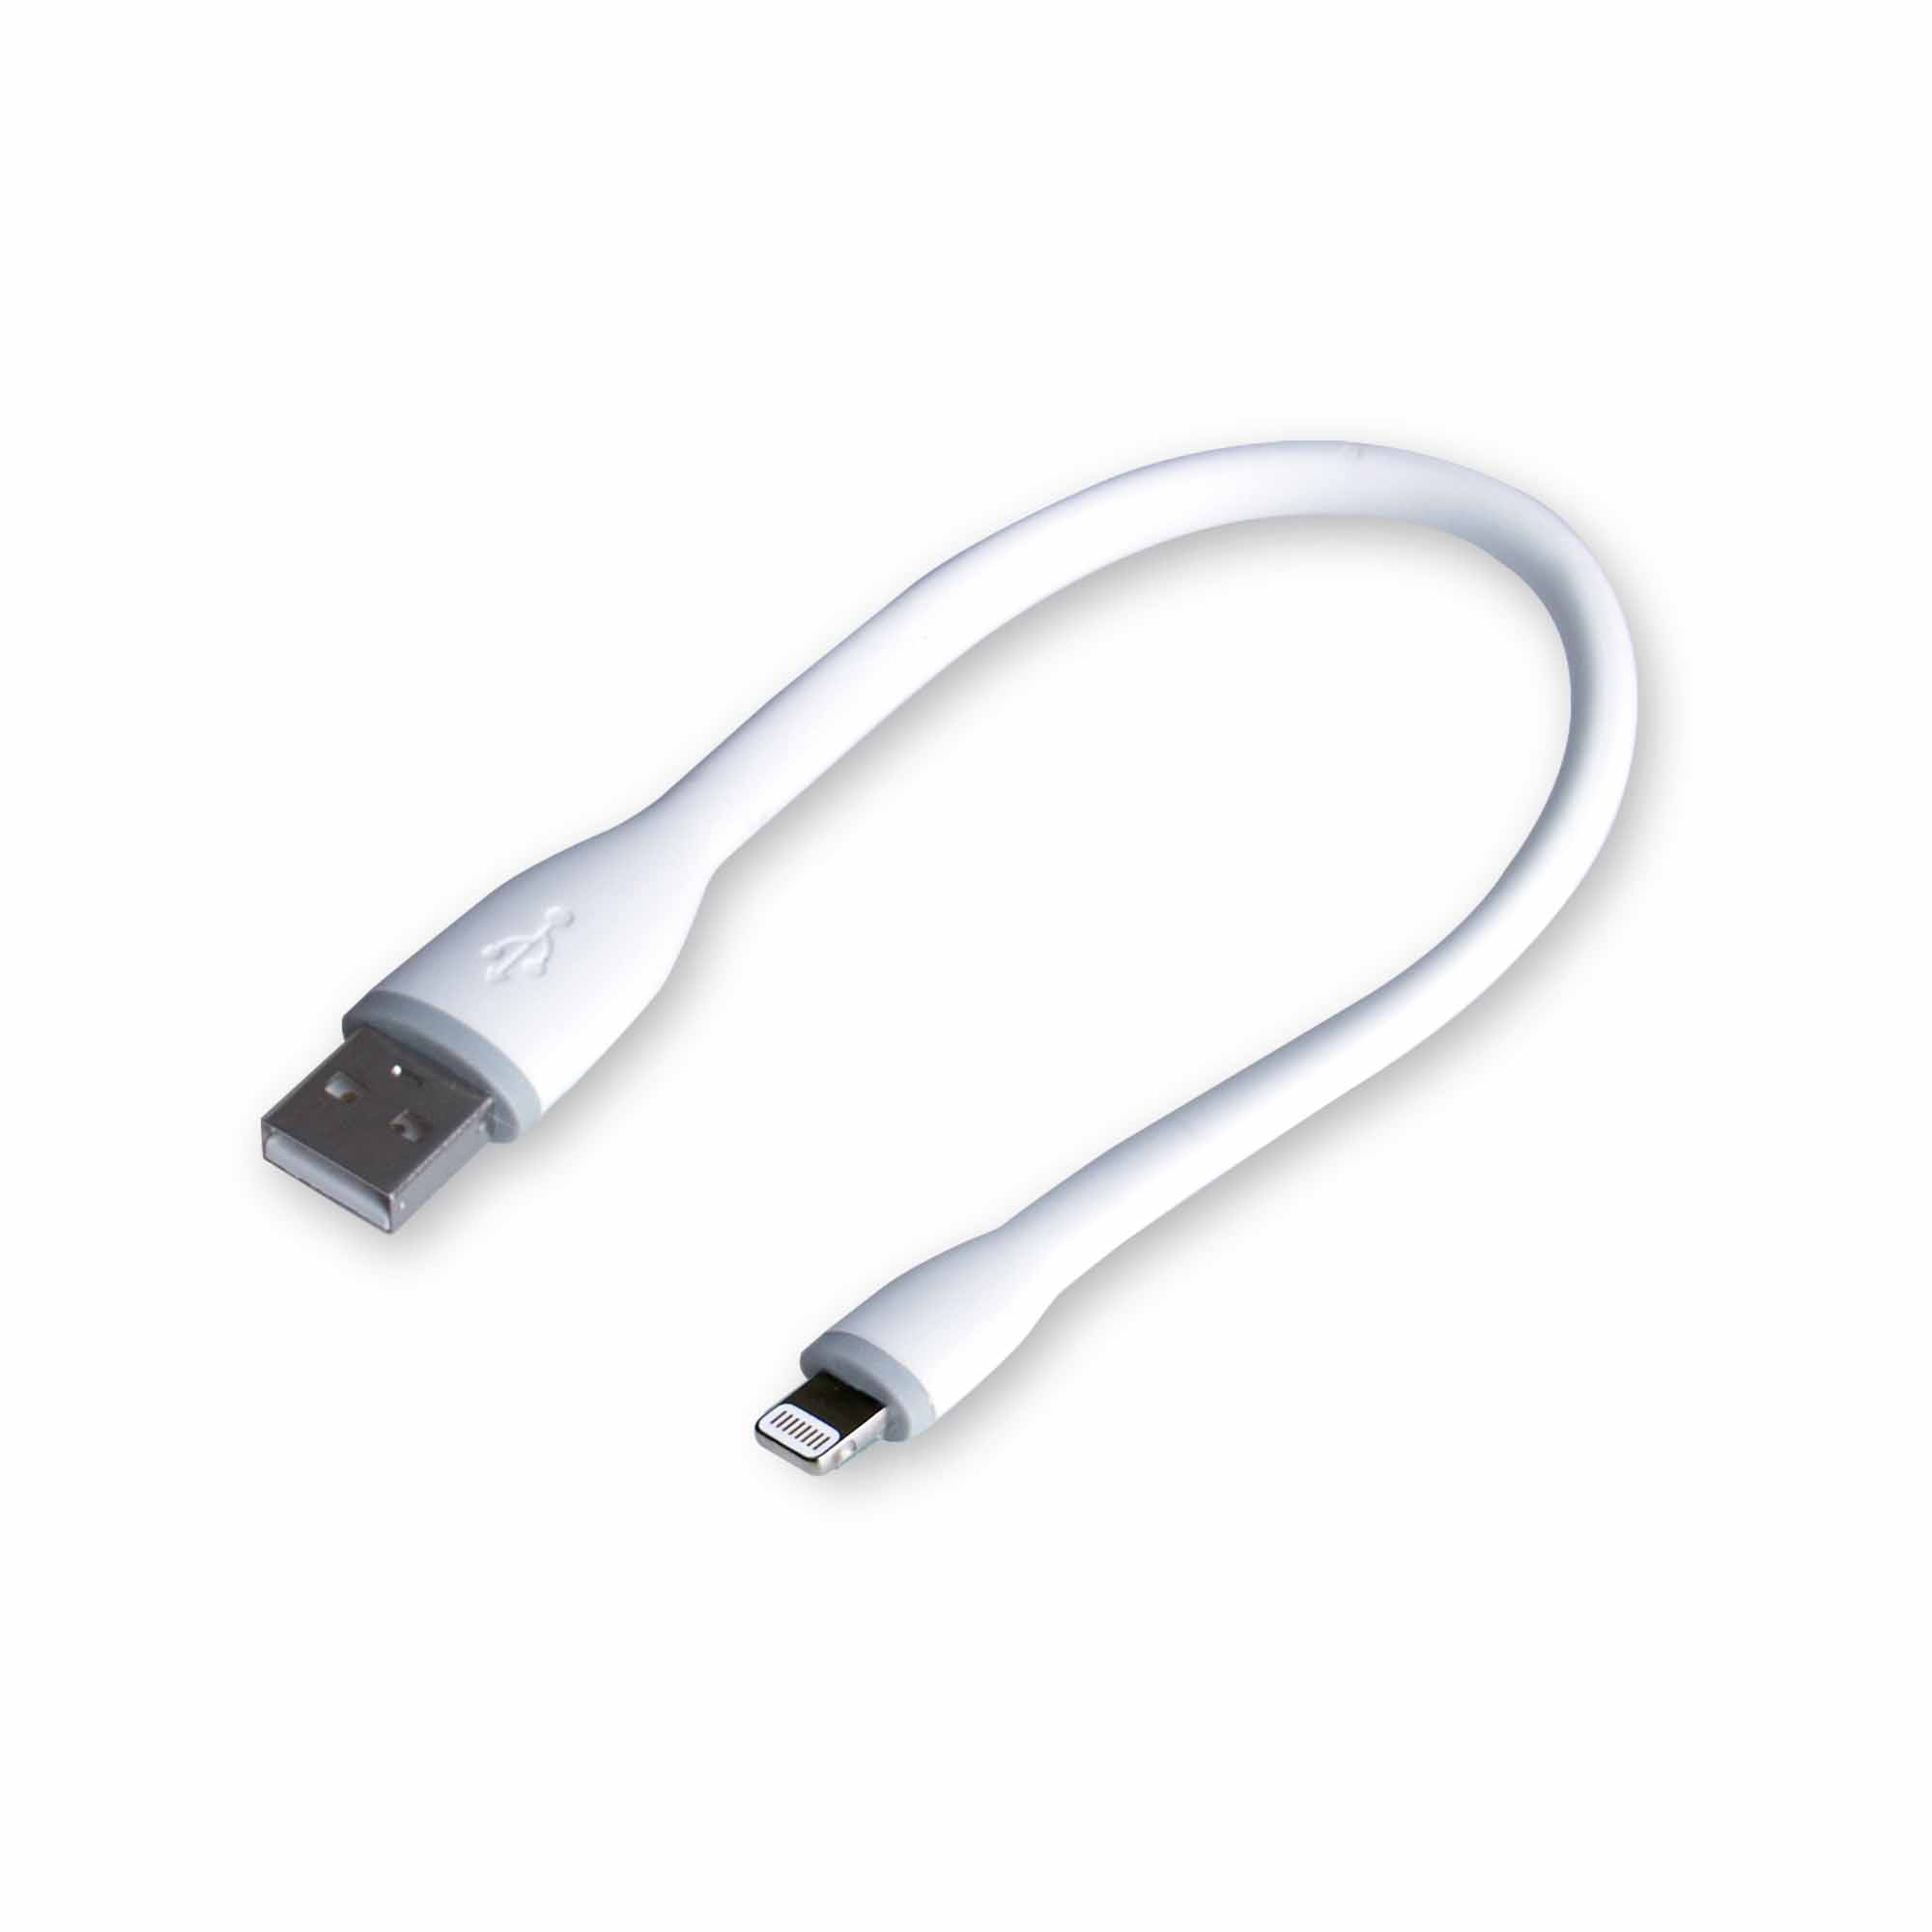 StarTech.com Cable en Espiral Lightning a USB de 15cm - Cable Lightning  Corto para iPhone / iPad / iPod - Certificación MFi de Apple - Blanco, 4 in  distributor/wholesale stock for resellers